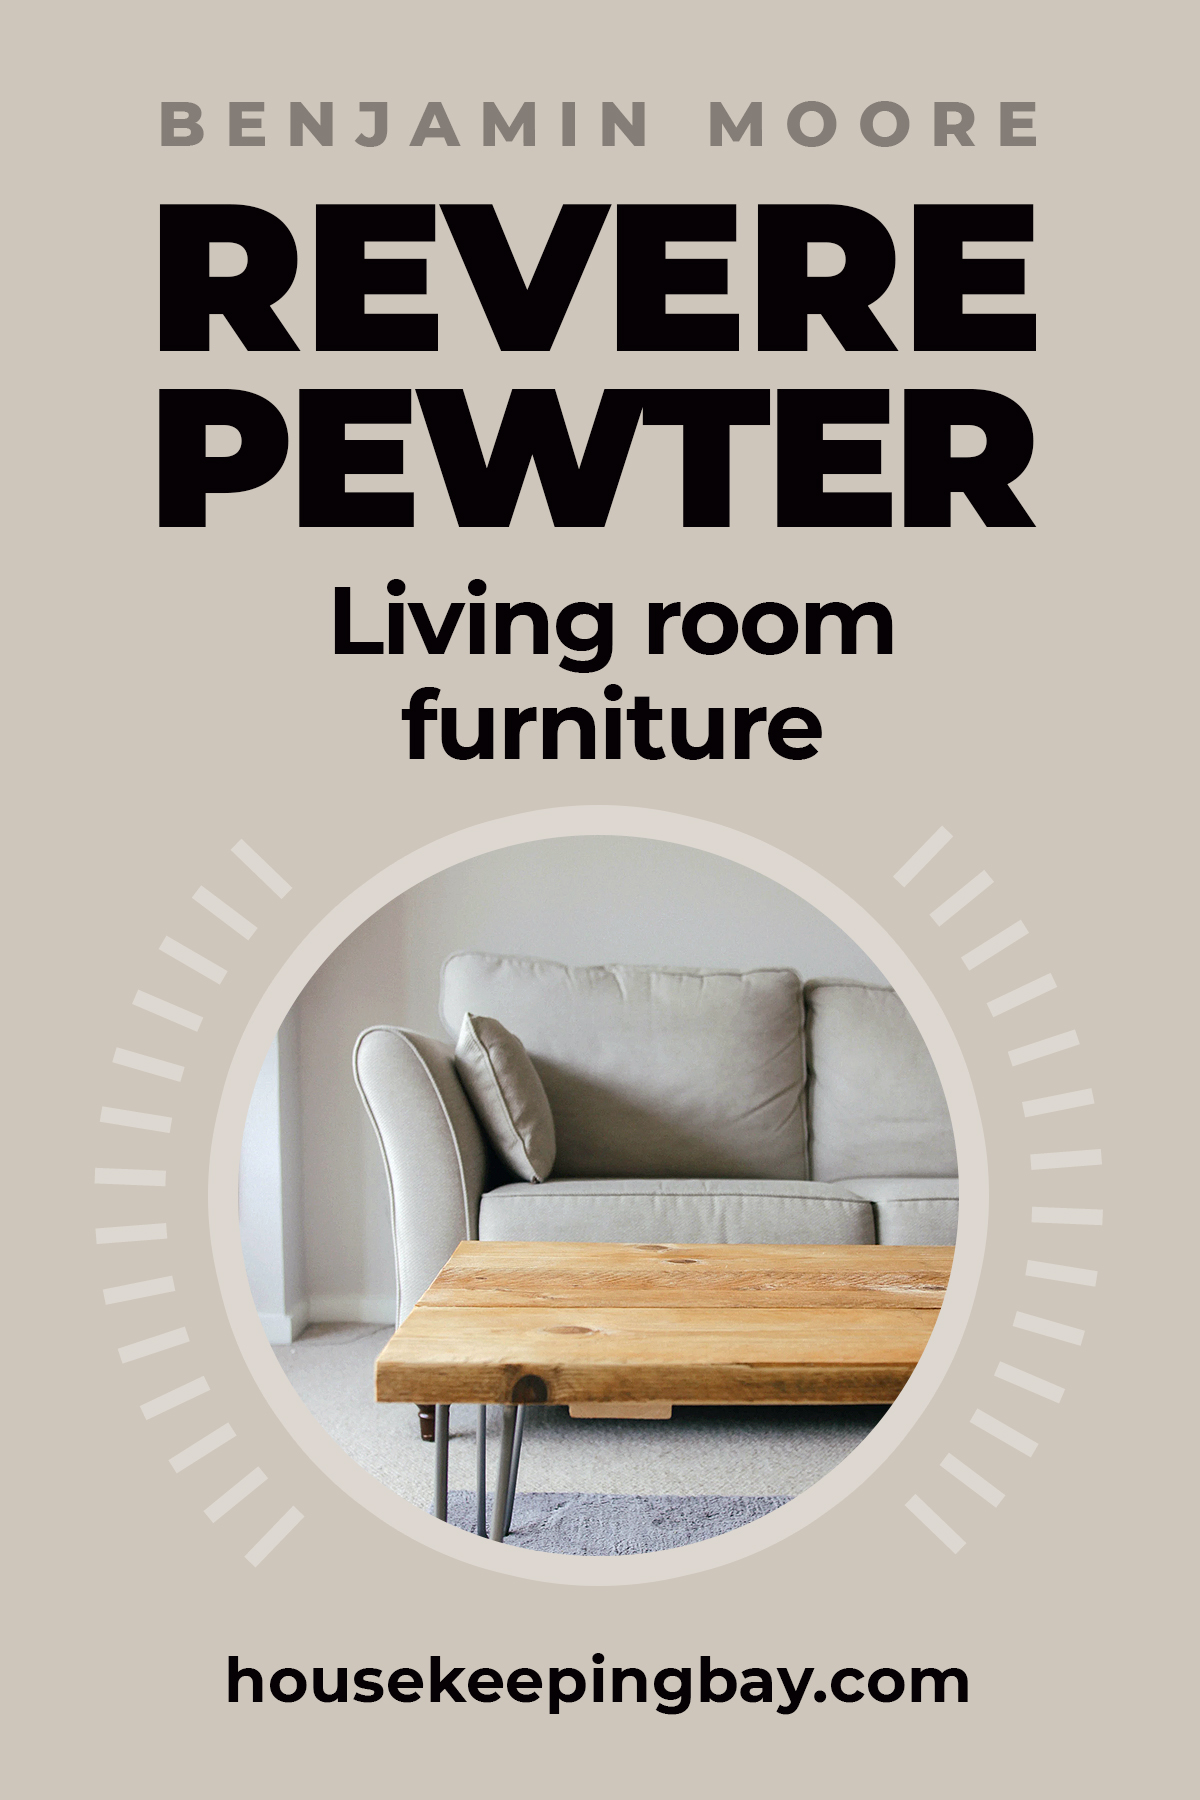 Revere pewter living room furniture